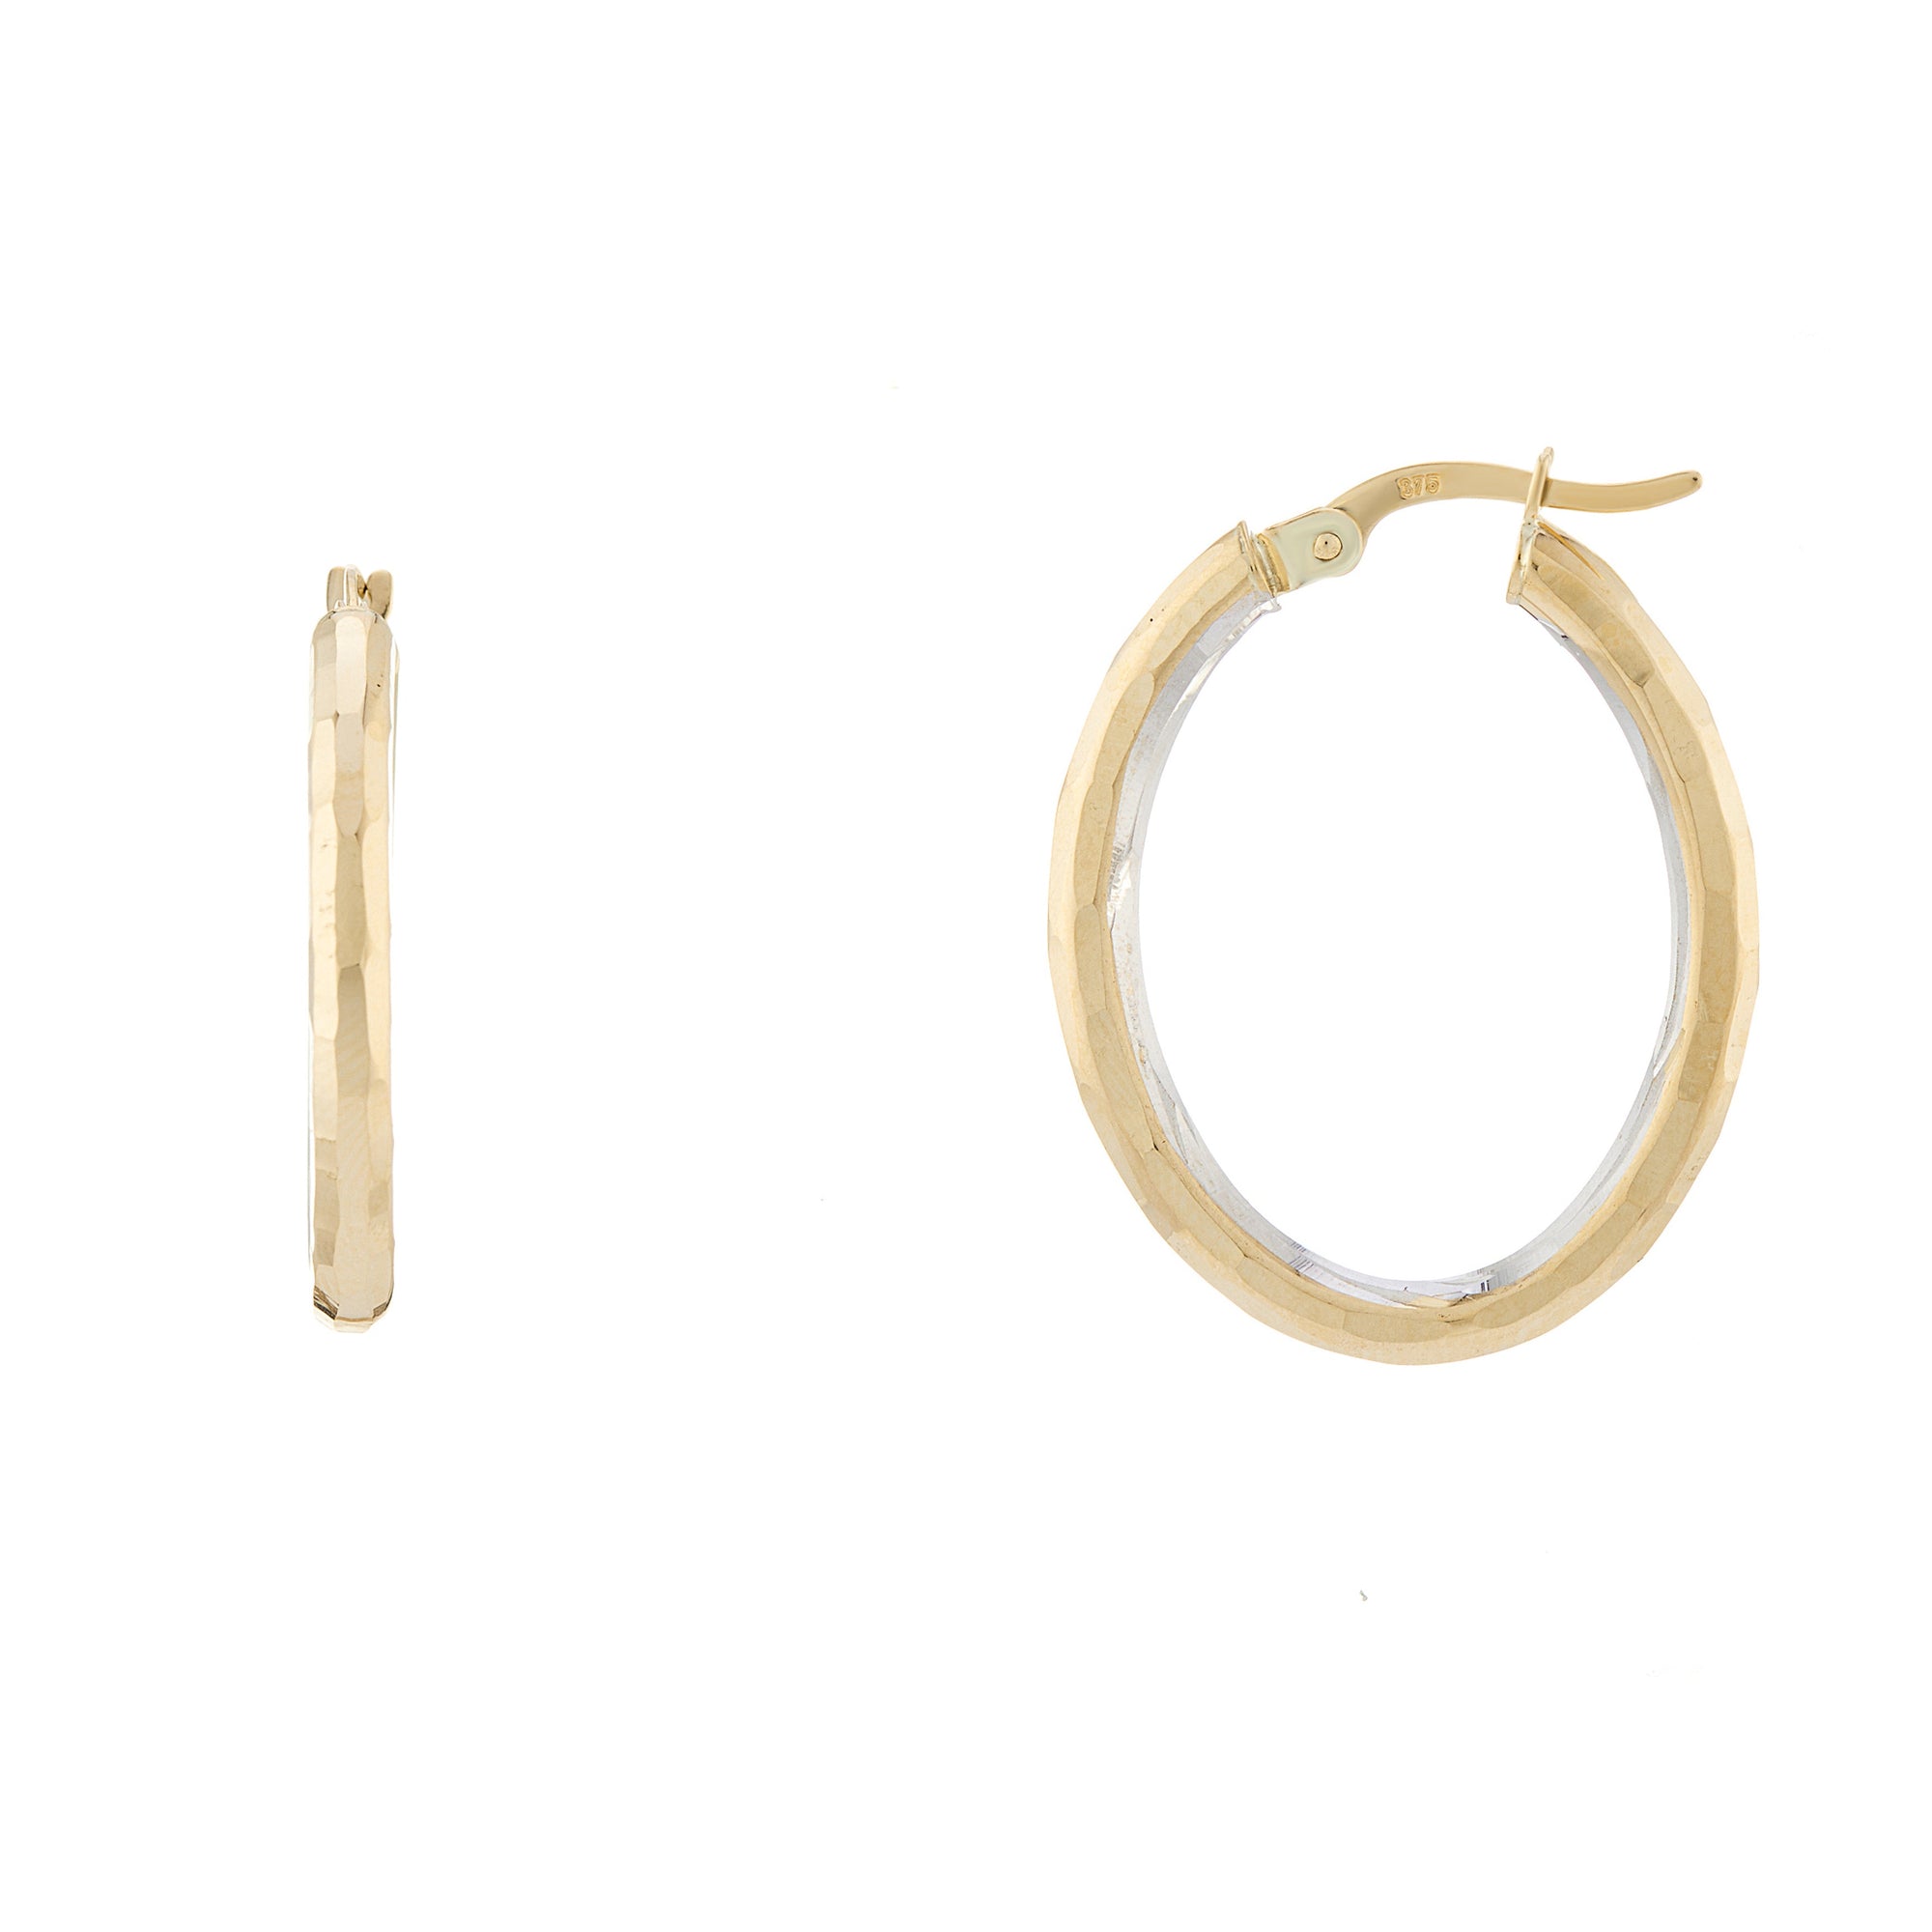 9ct gold 16mm x 20mm diamond cut hoop earrings with inside rhodiumed